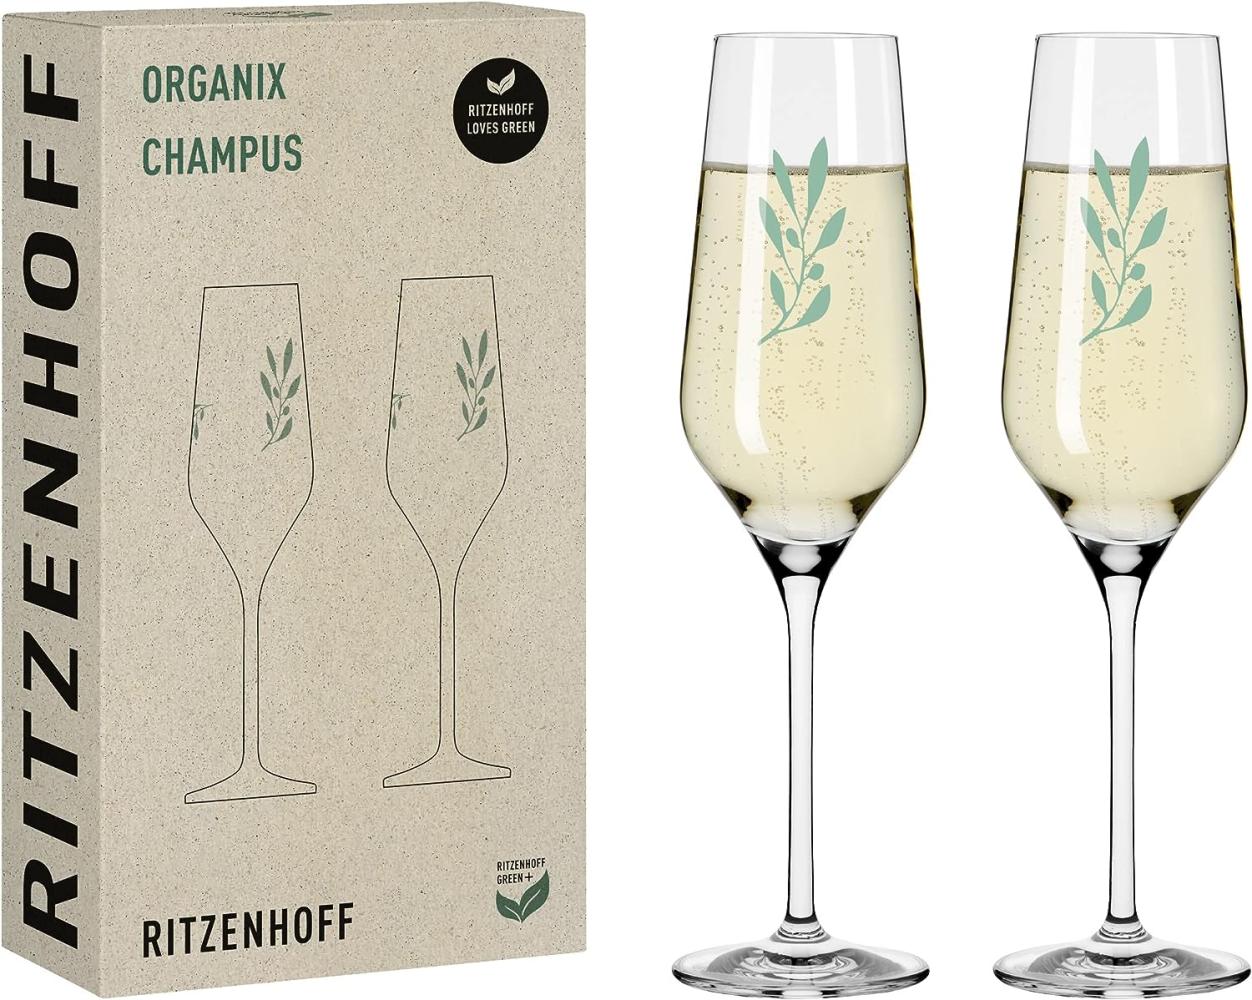 Ritzenhoff 3924001 Champagnerglas-Set #1 ORGANIX Romi Bohnenberg 2023 Bild 1